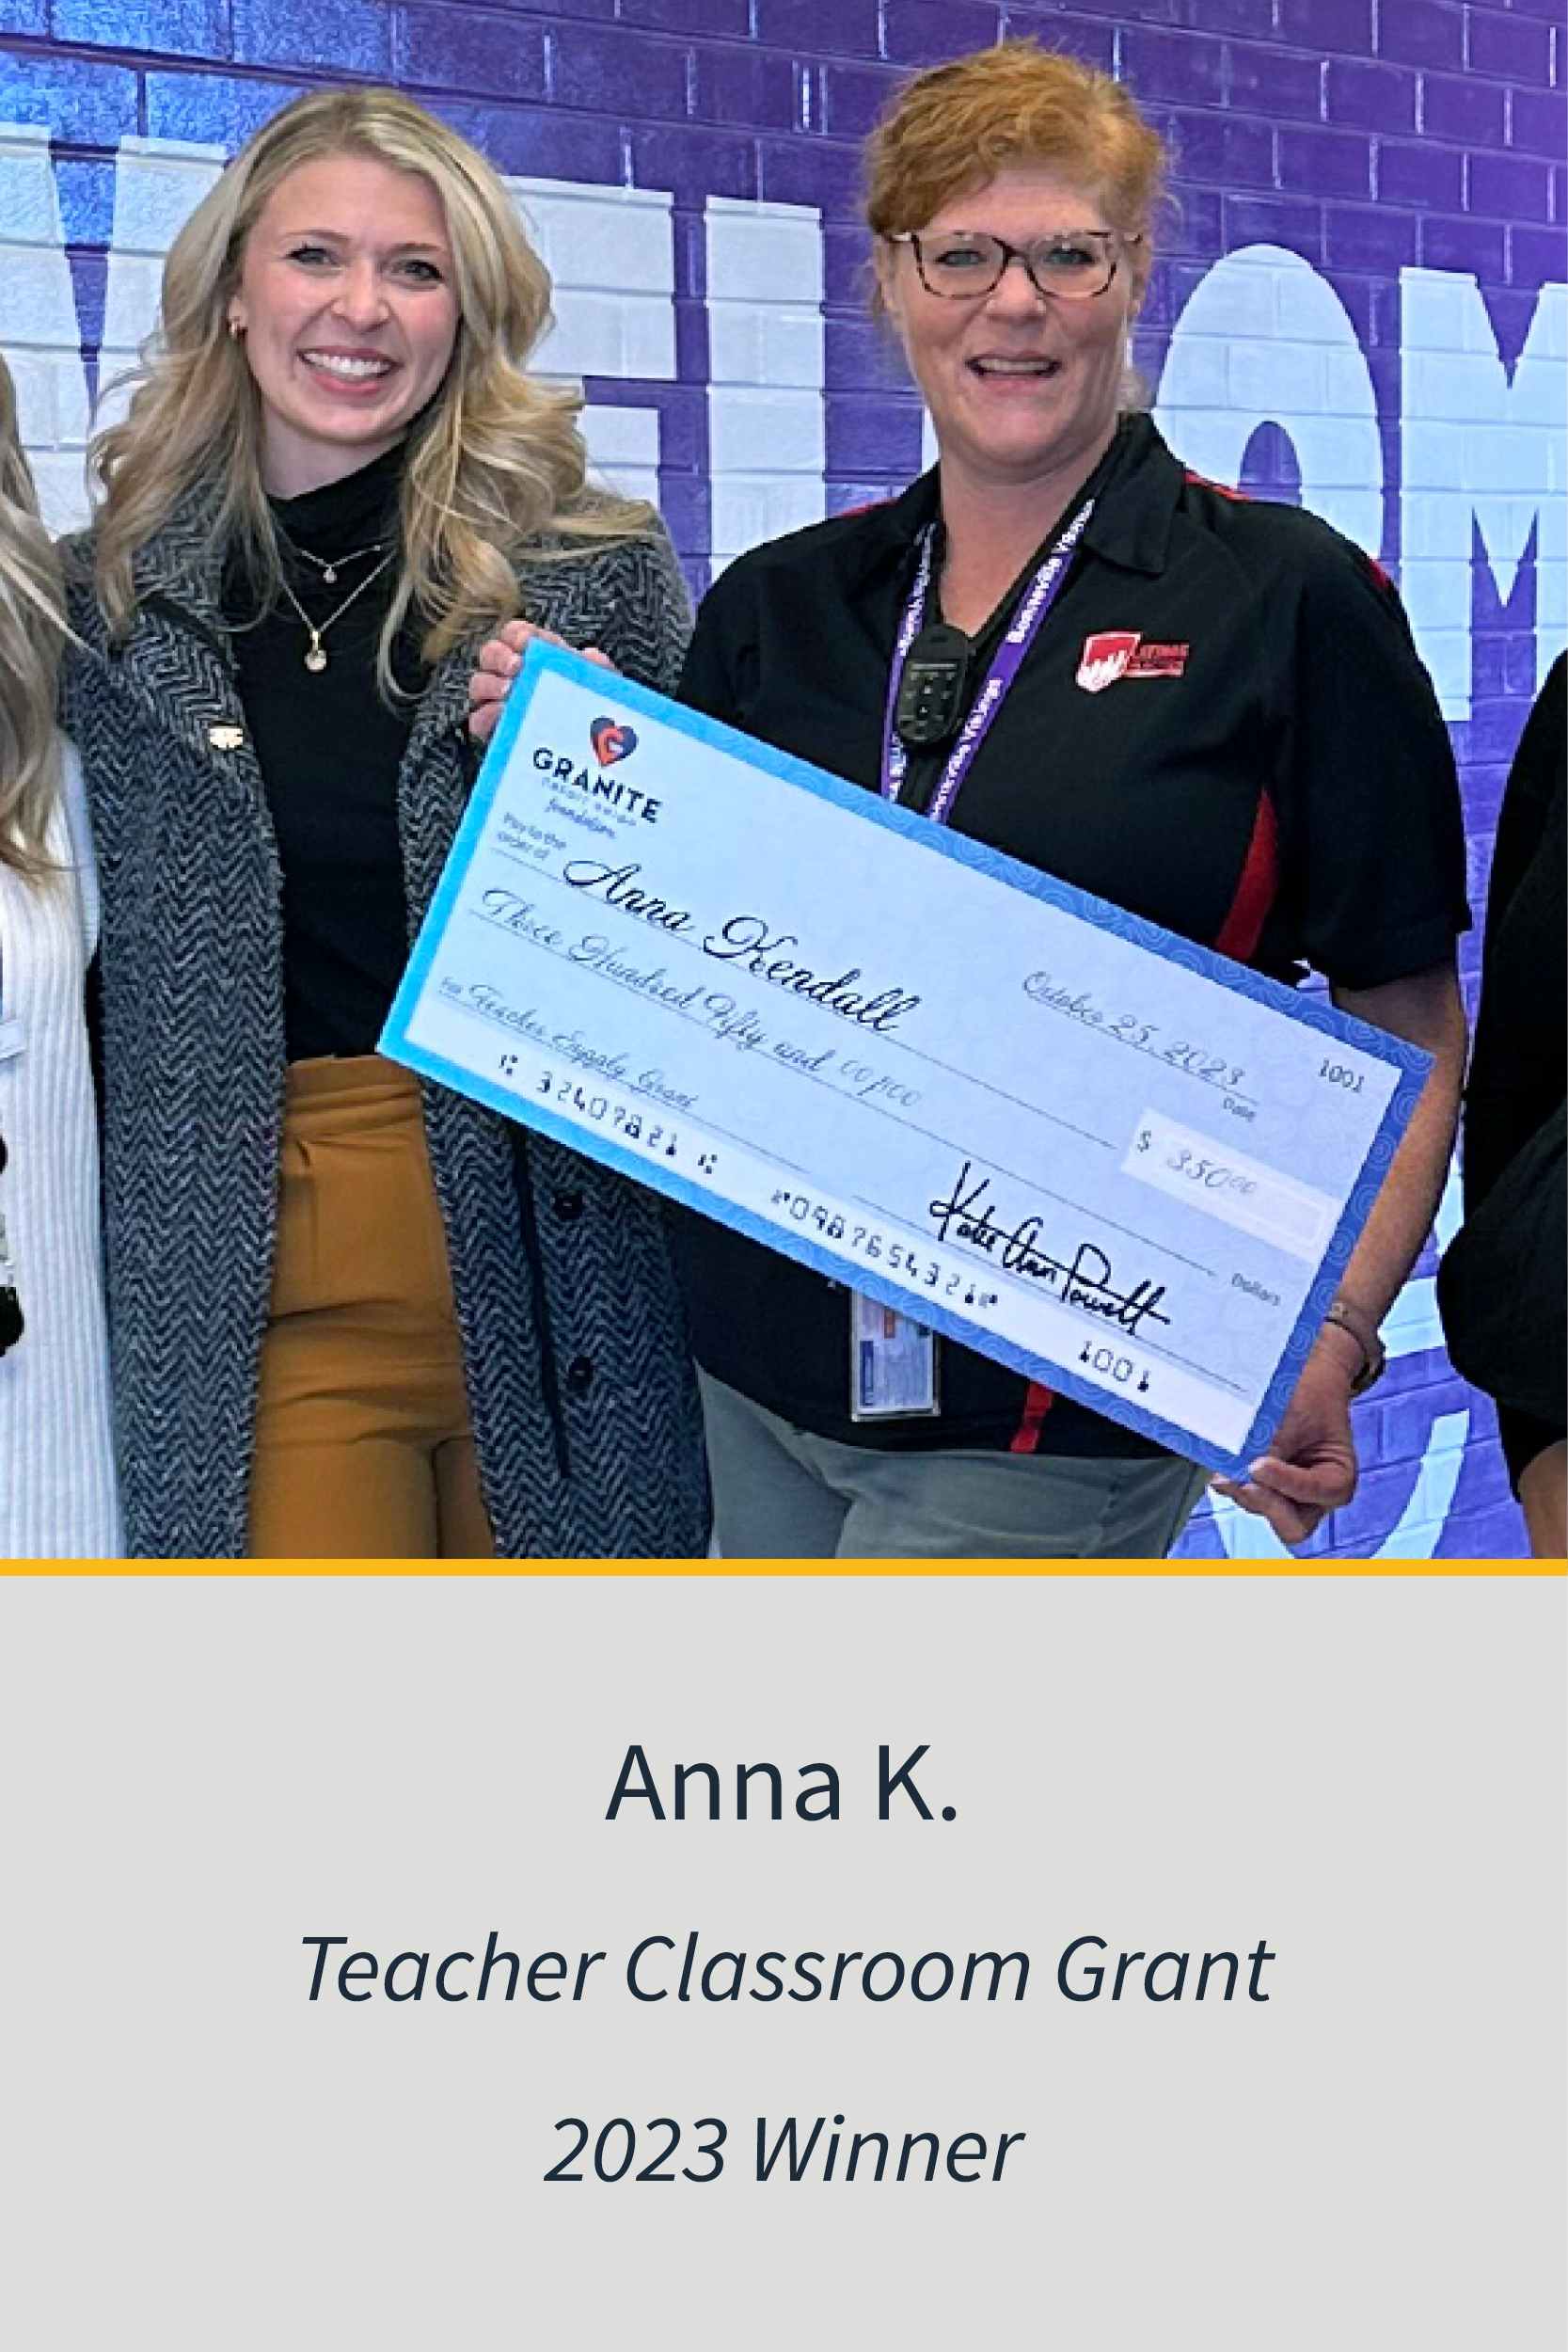 Teachers Classroom Grant 2023 Winner Anna K.